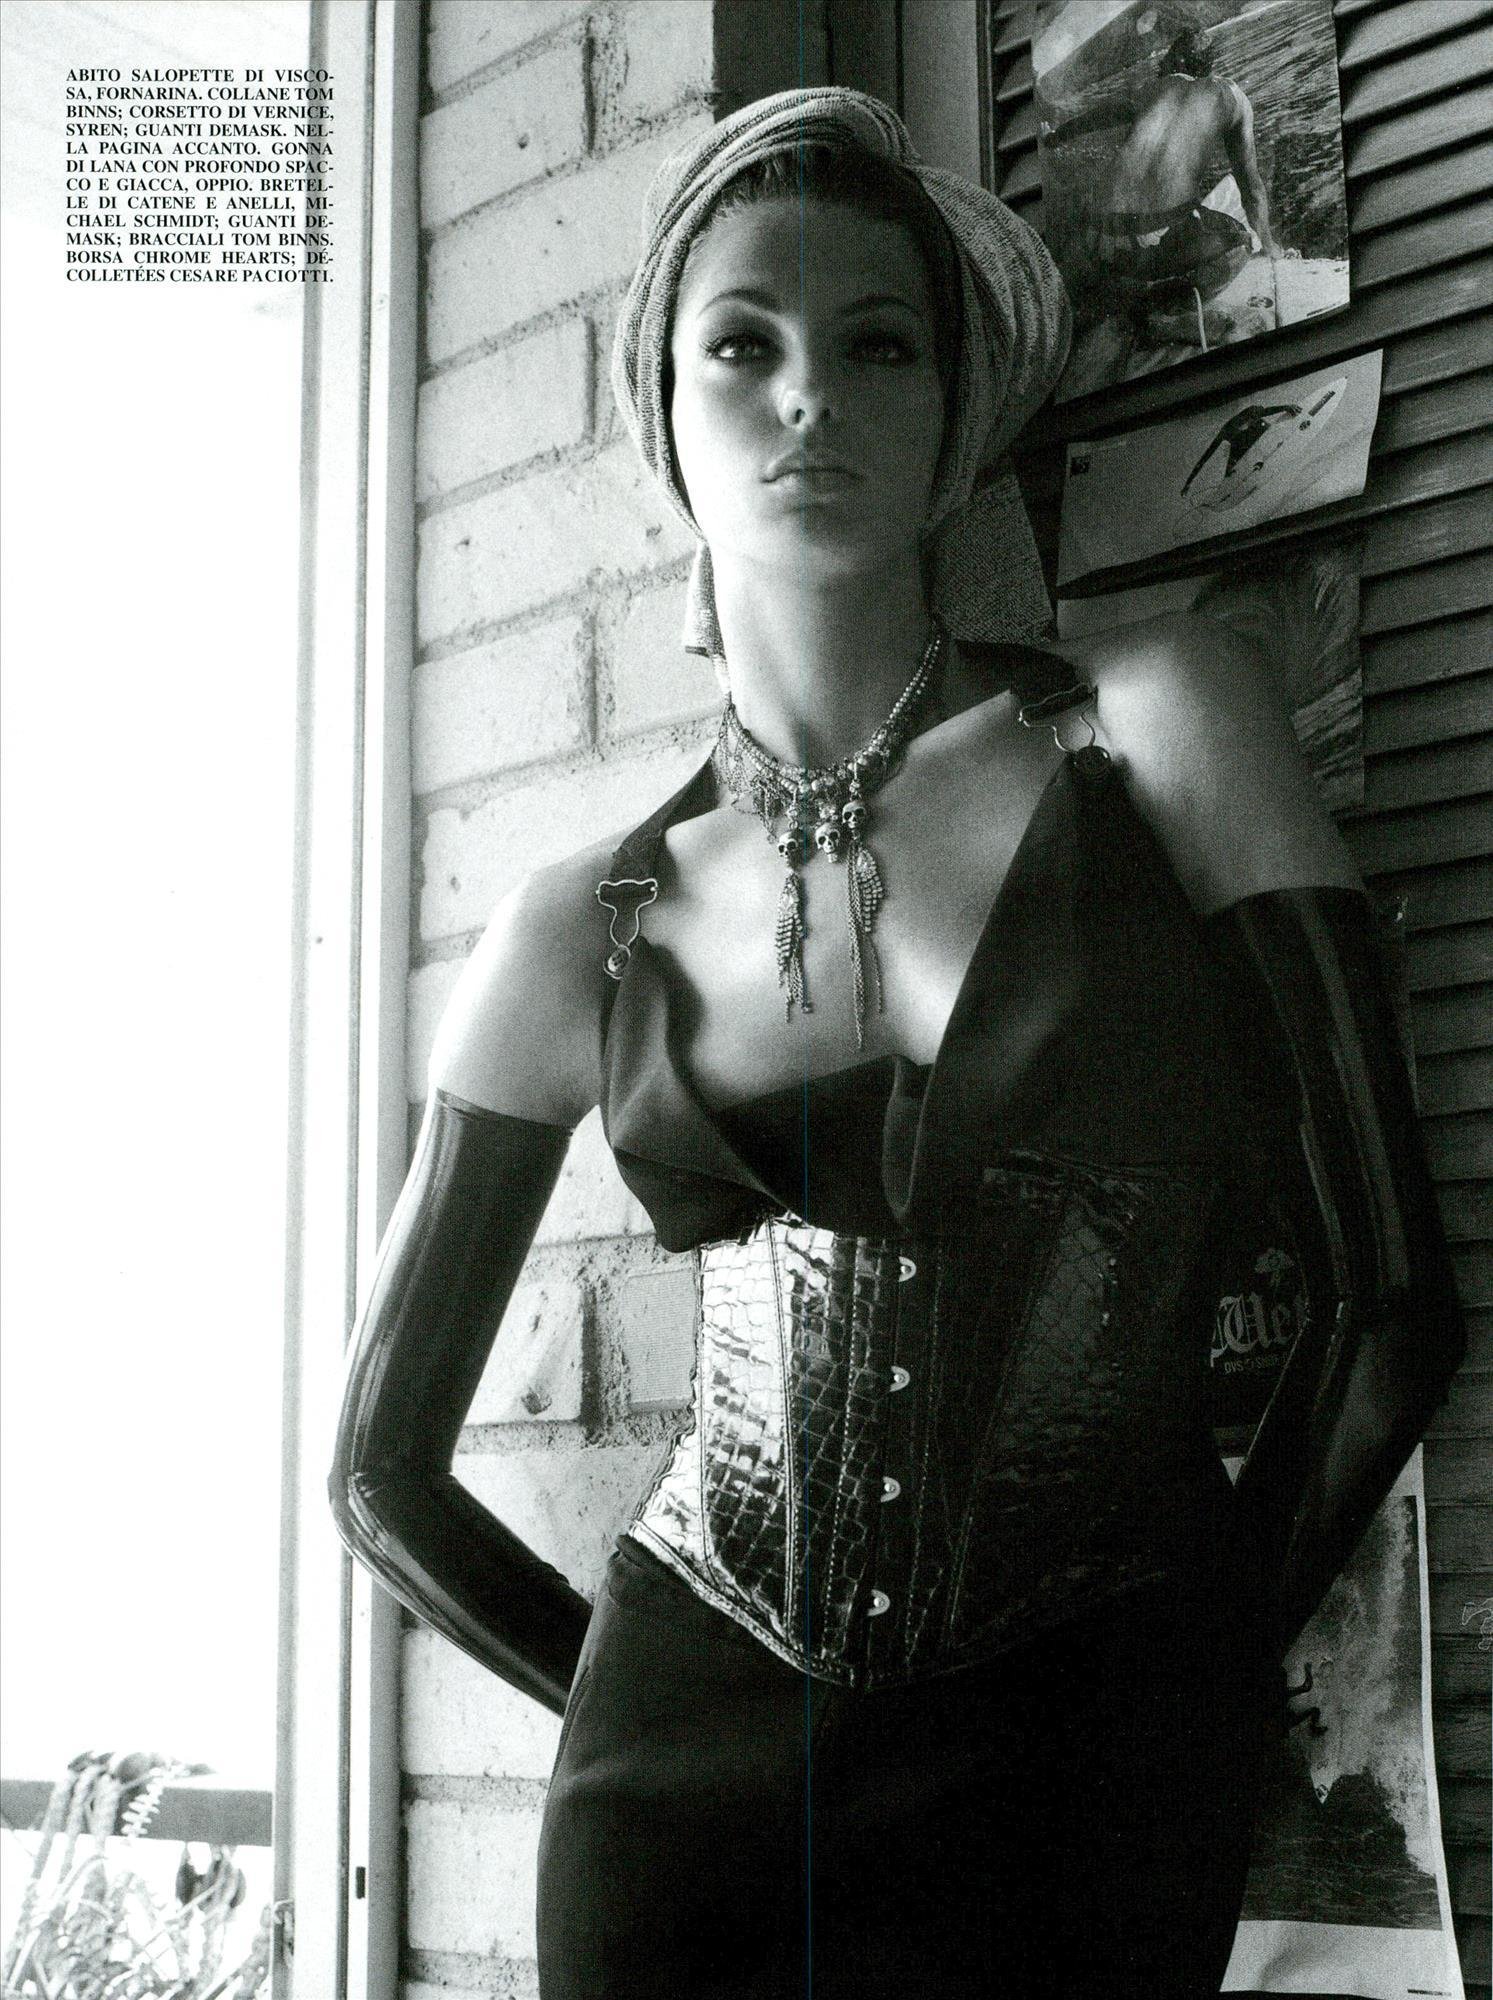 Daria-Werbowy-Surf-Rider-by-Steven-Meisel-Vogue-Italia-Aug-2003-00001.jpeg